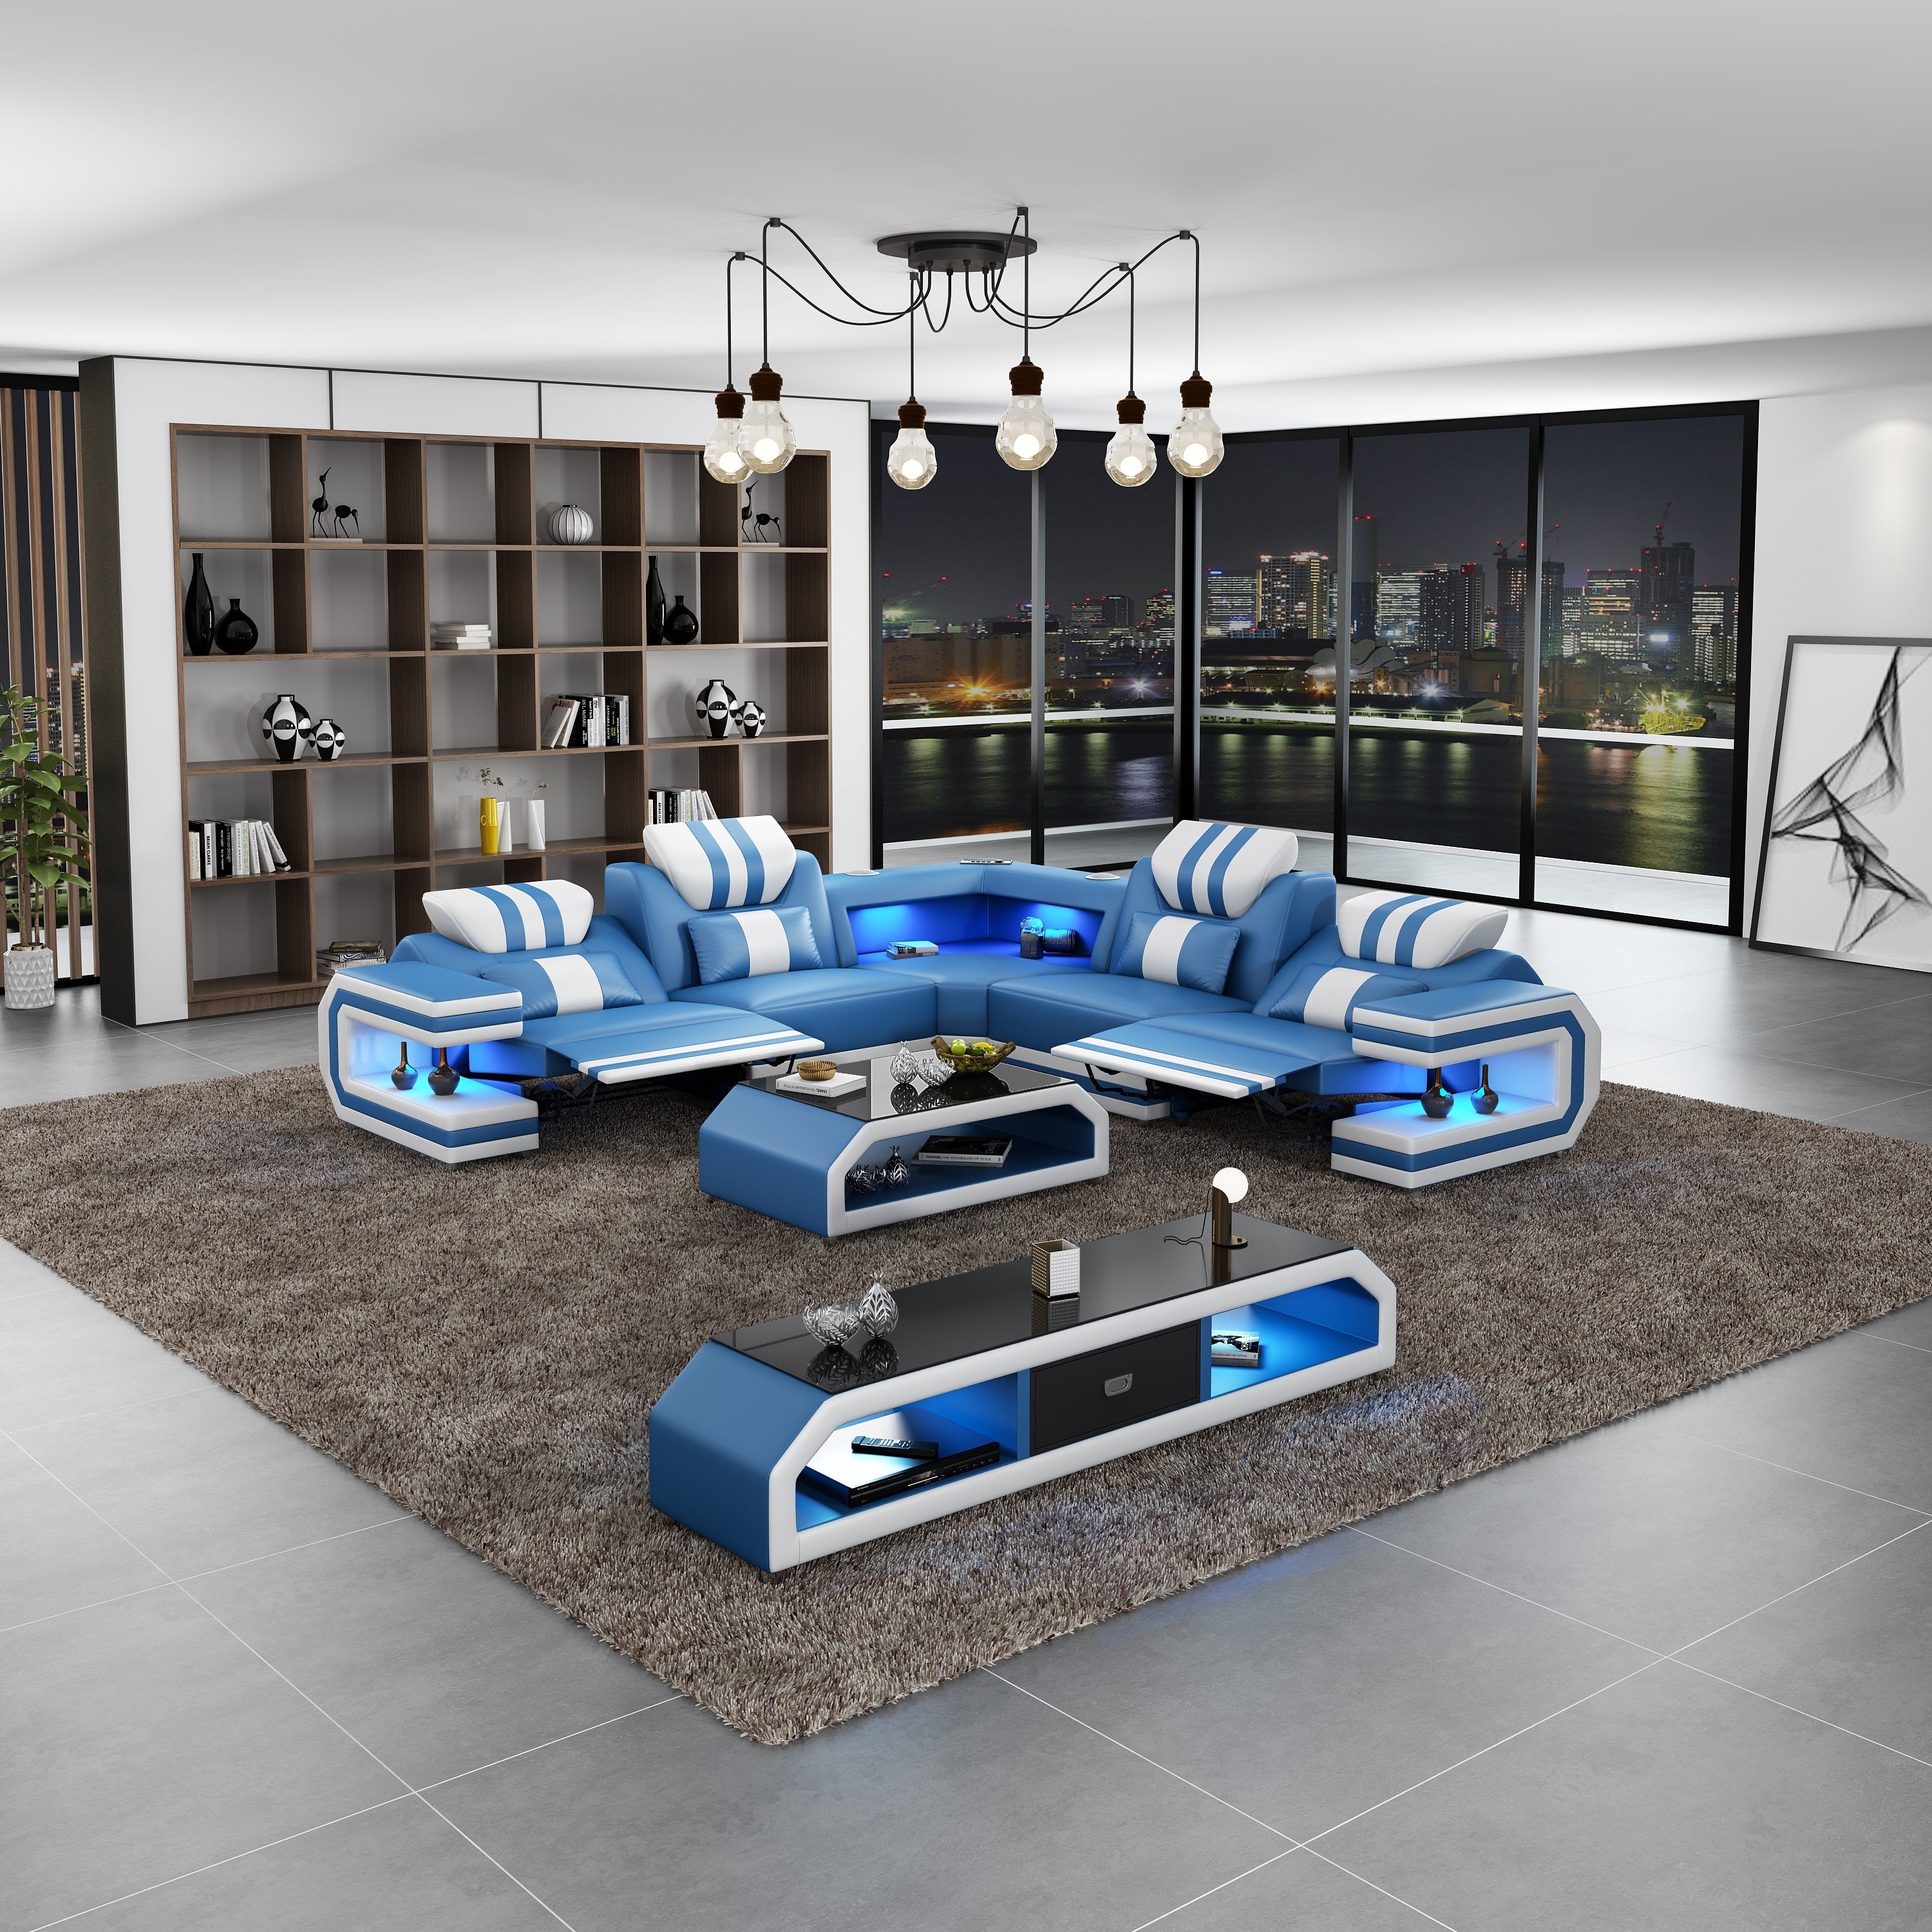 European Furniture - Lightsaber LED Sectional Dual Recliners Blue White Italian Leather - LED-87772-BWLU-DRR - New Star Living